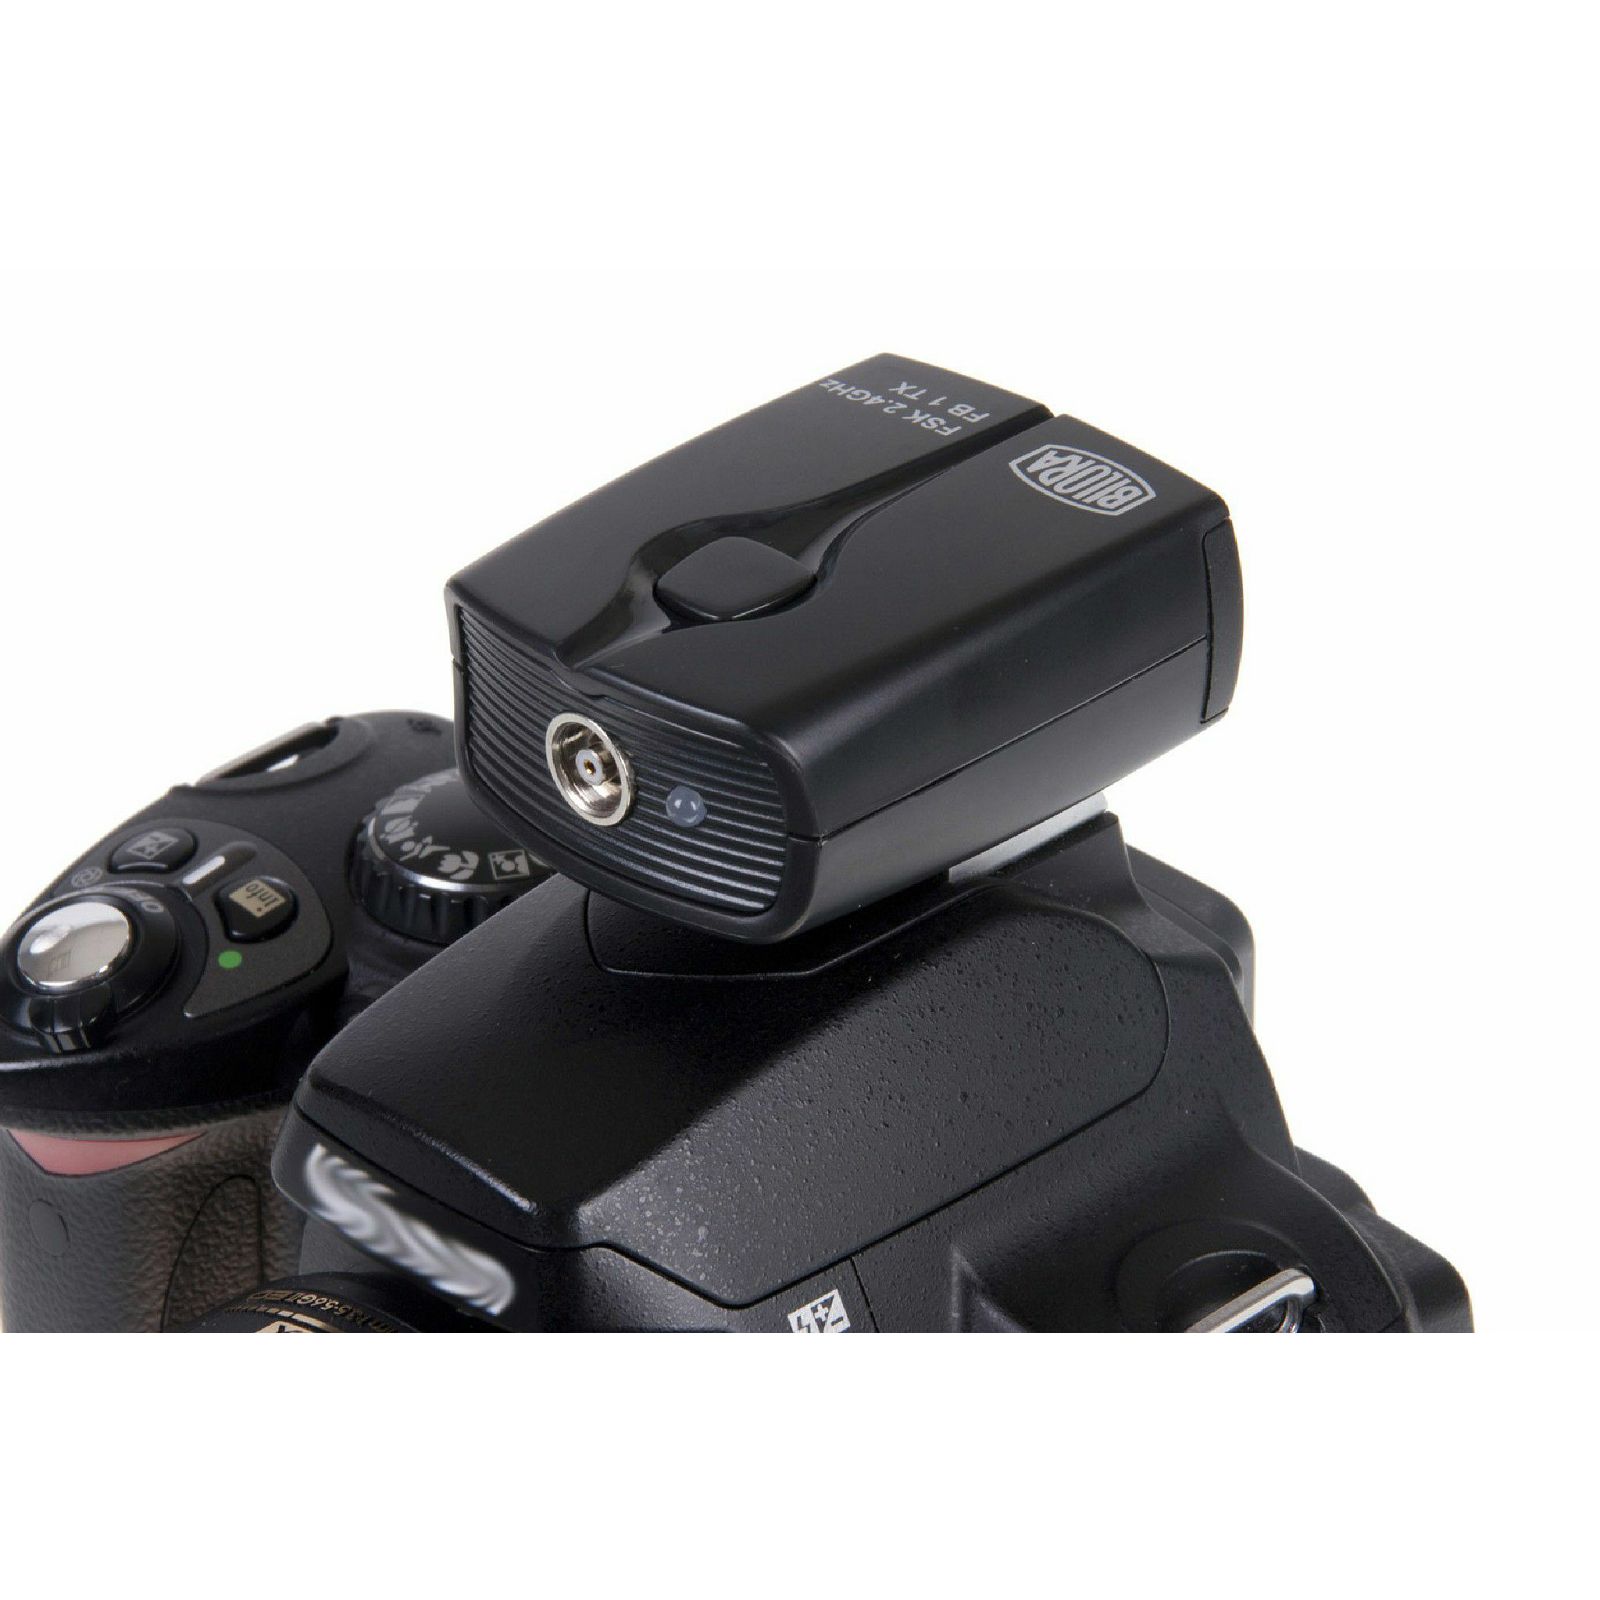 Bilora bežični okidač za bljeskalice FB1-N3 2.4 GHz N3 Nikon (komplet odašiljač + prijemnik) D750, D500, D610, D7200, D5600, D5500, D5300, D3400, D3300, D7100